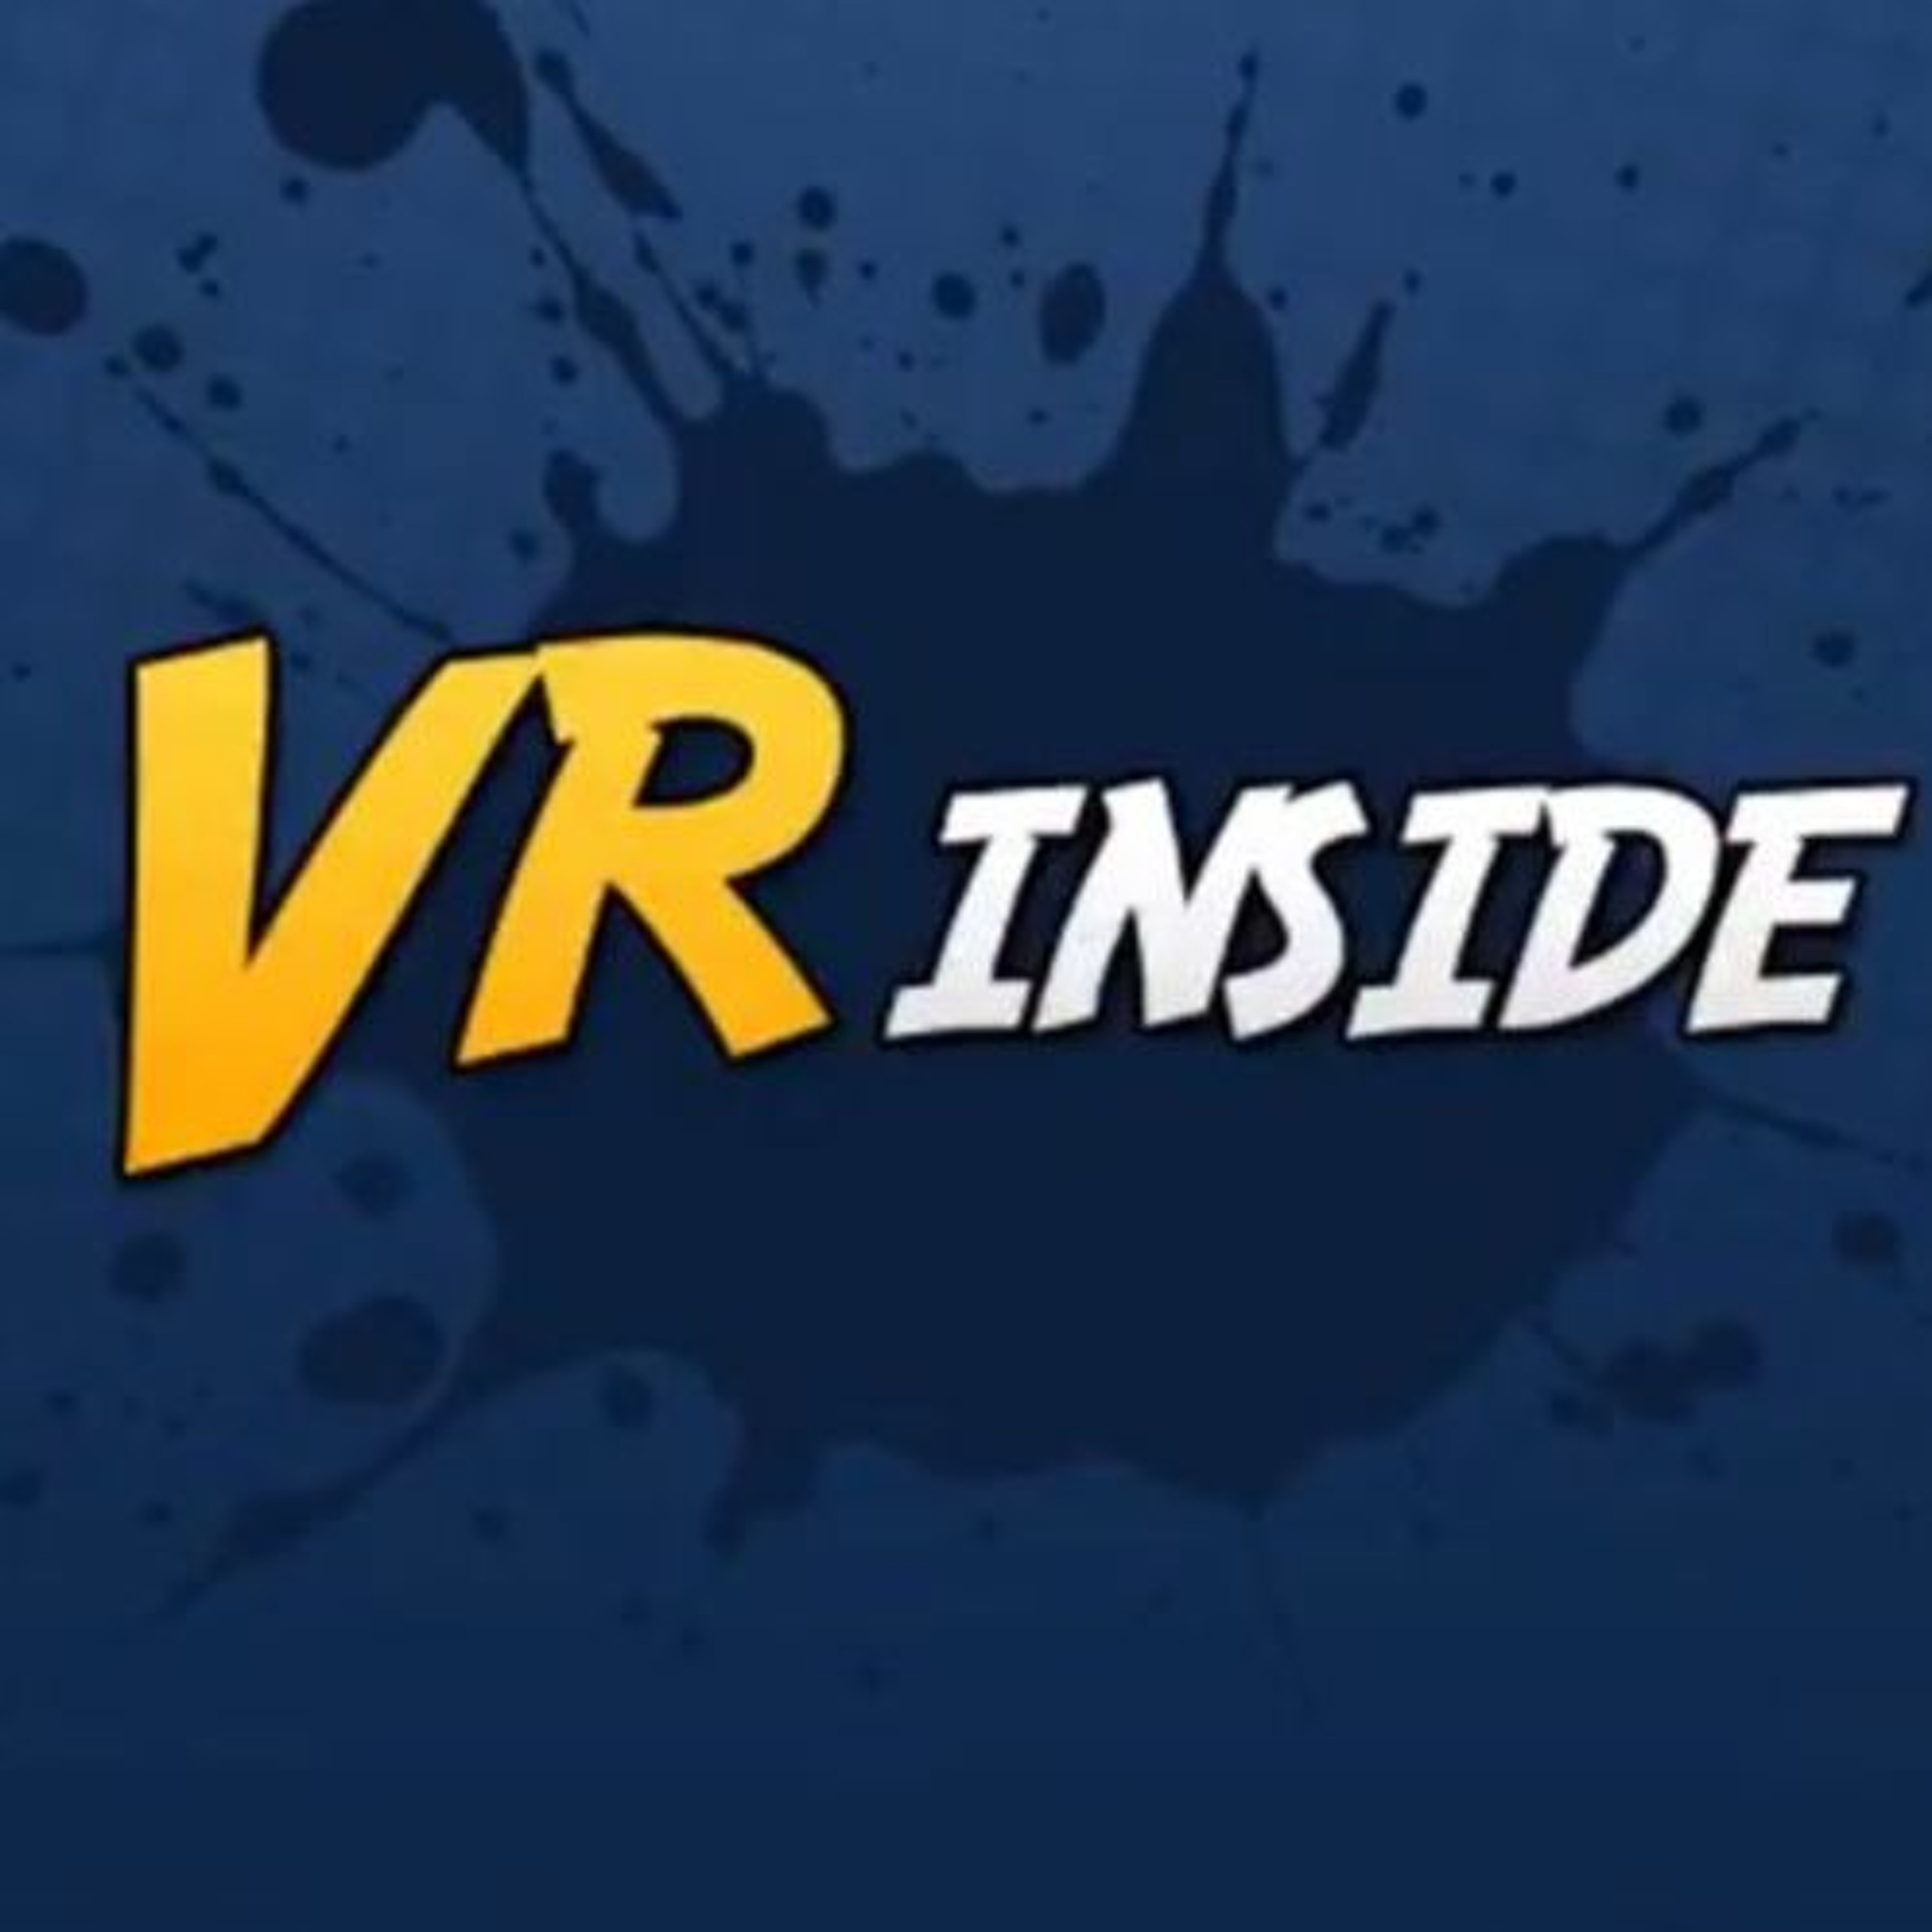 Ep.2 - Vive Focus, Iphone X AR Functions, Arktika.1 & Nintendo Denies VR